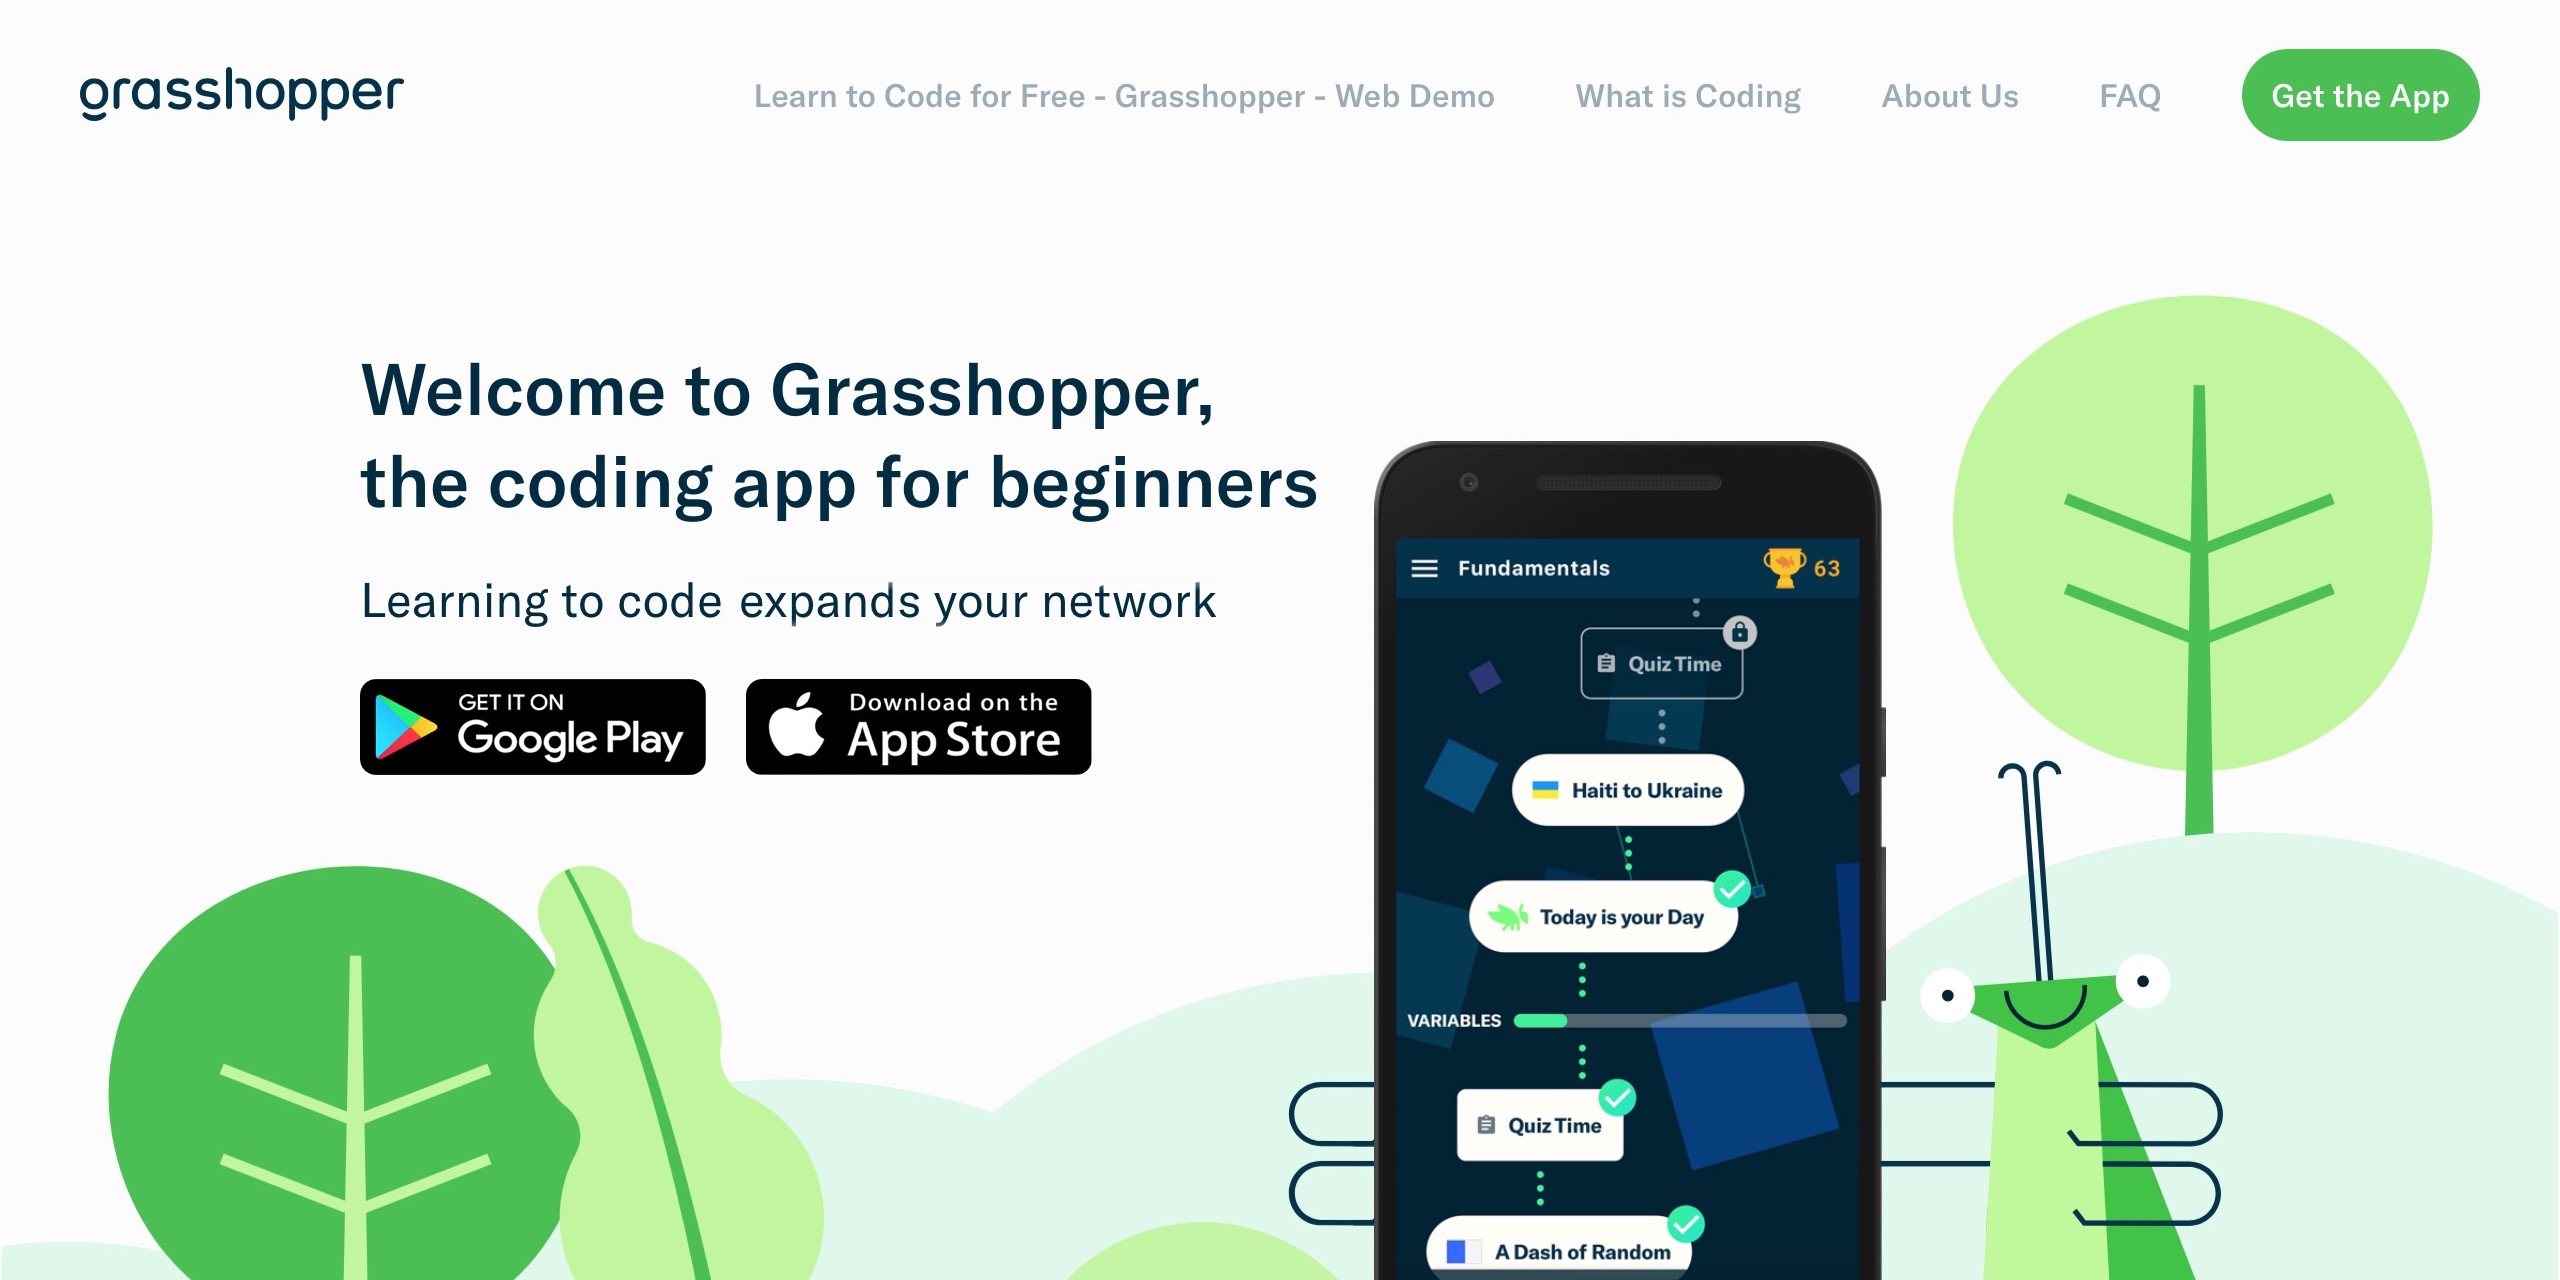 grasshopper app download